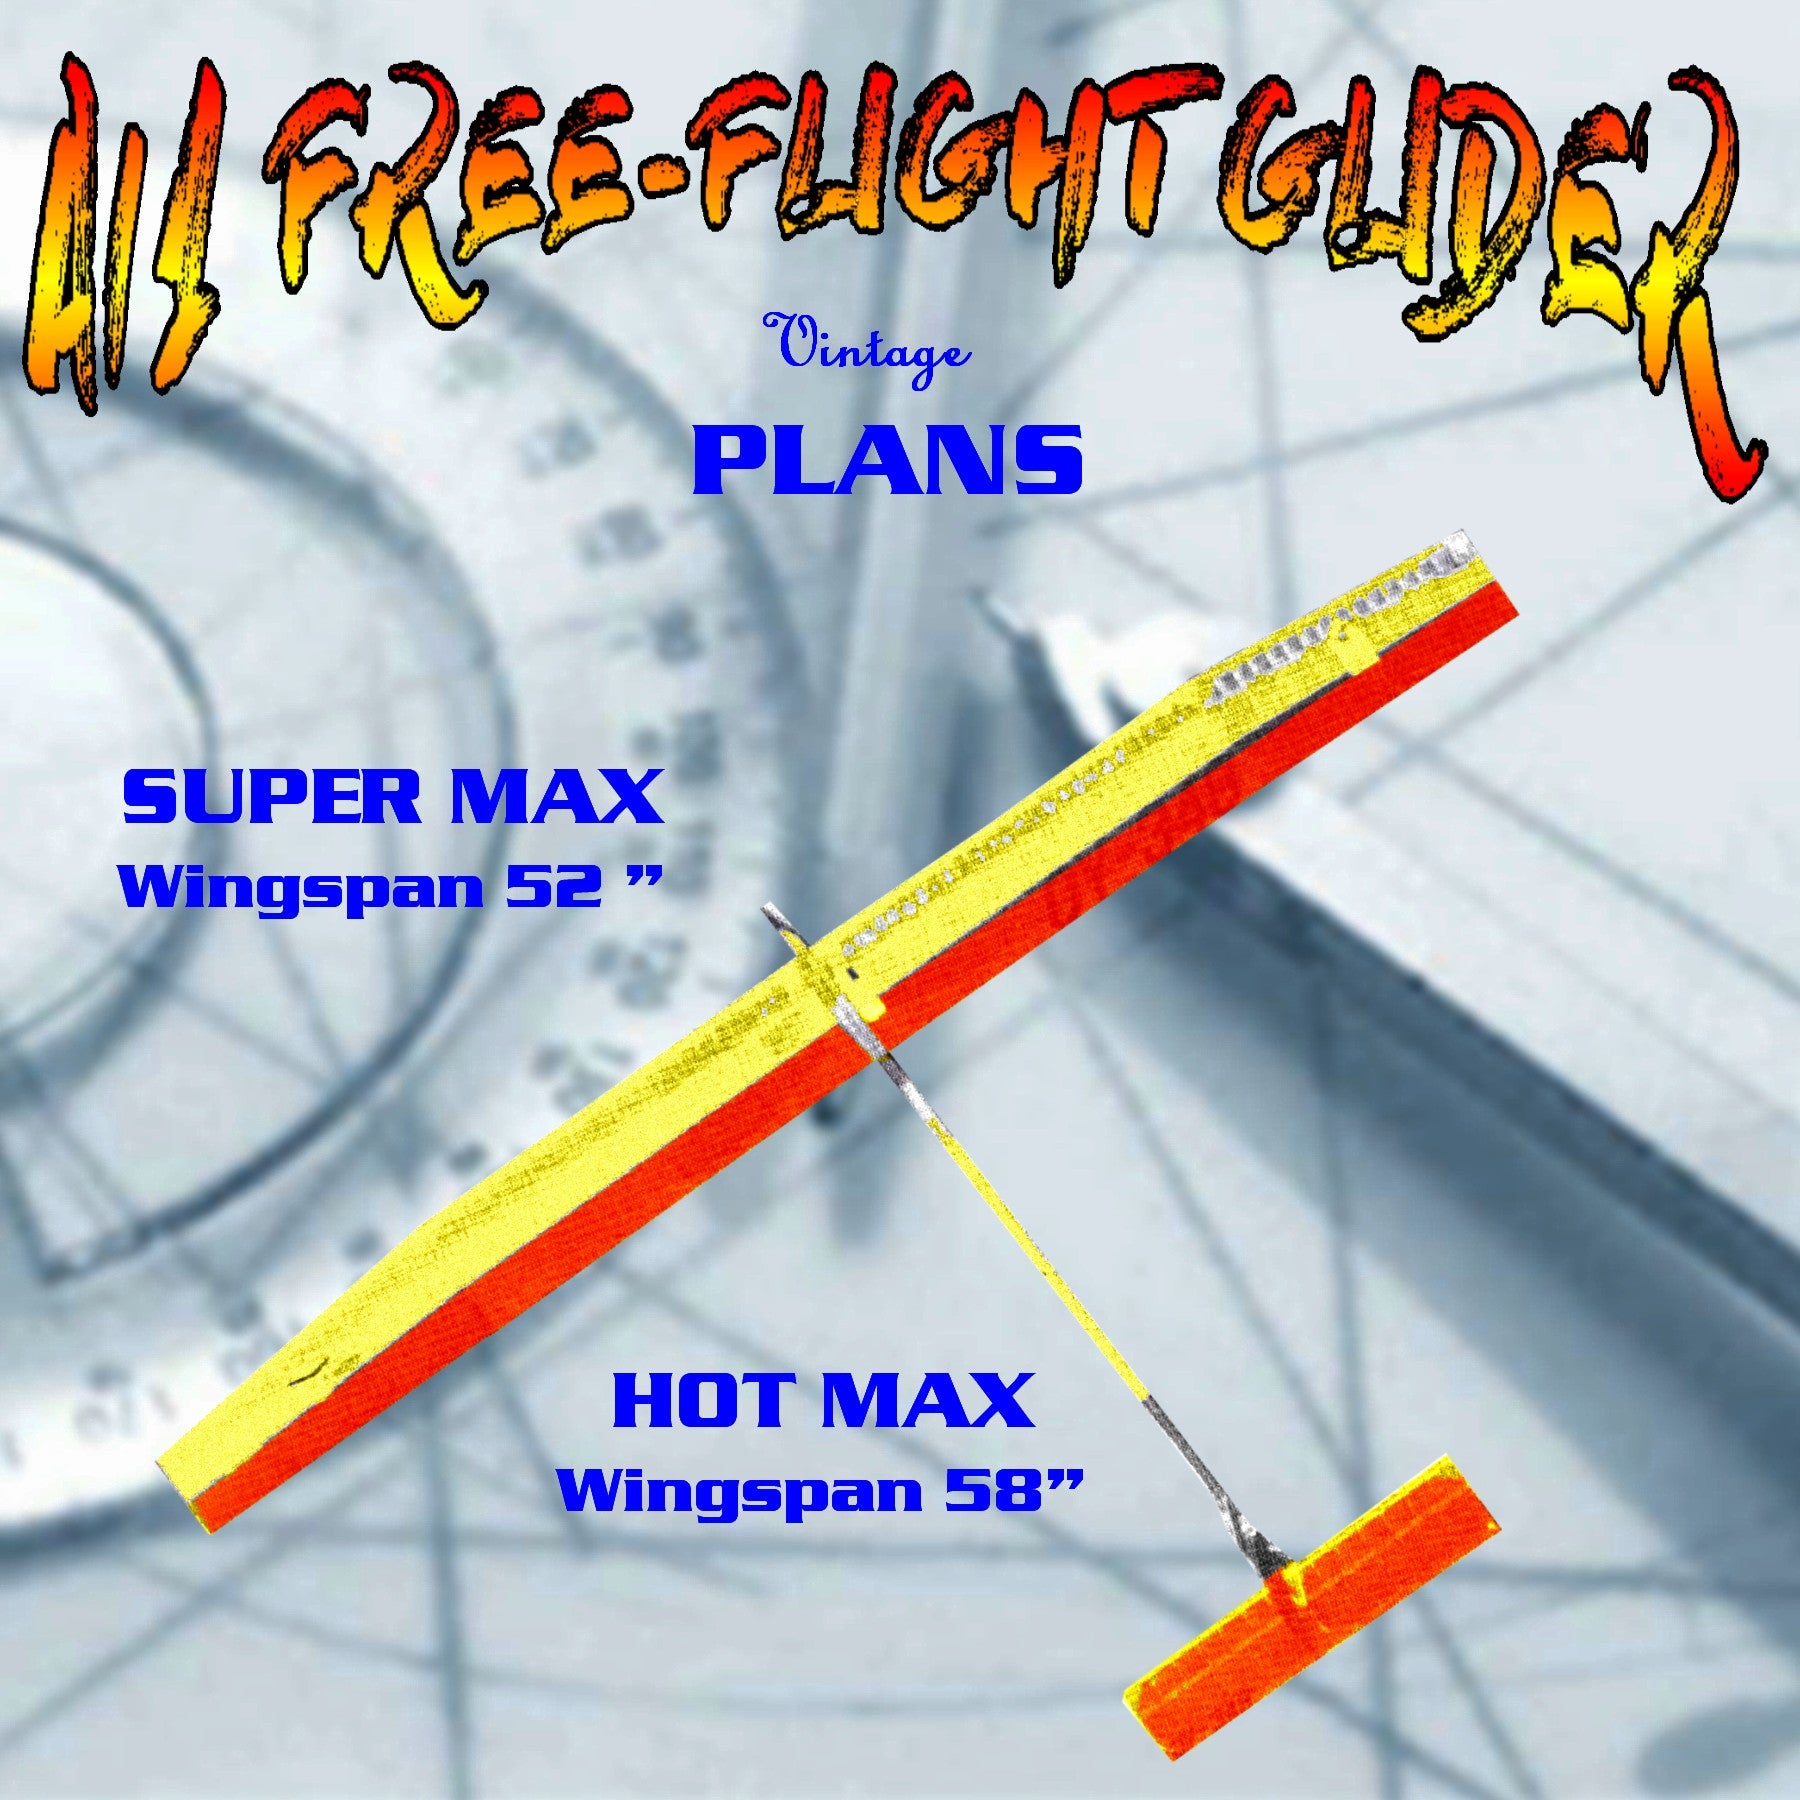 full size printed plan a/1 free-flight glider 1 58" w/s 2 52 1/2" w/s " hot & super max